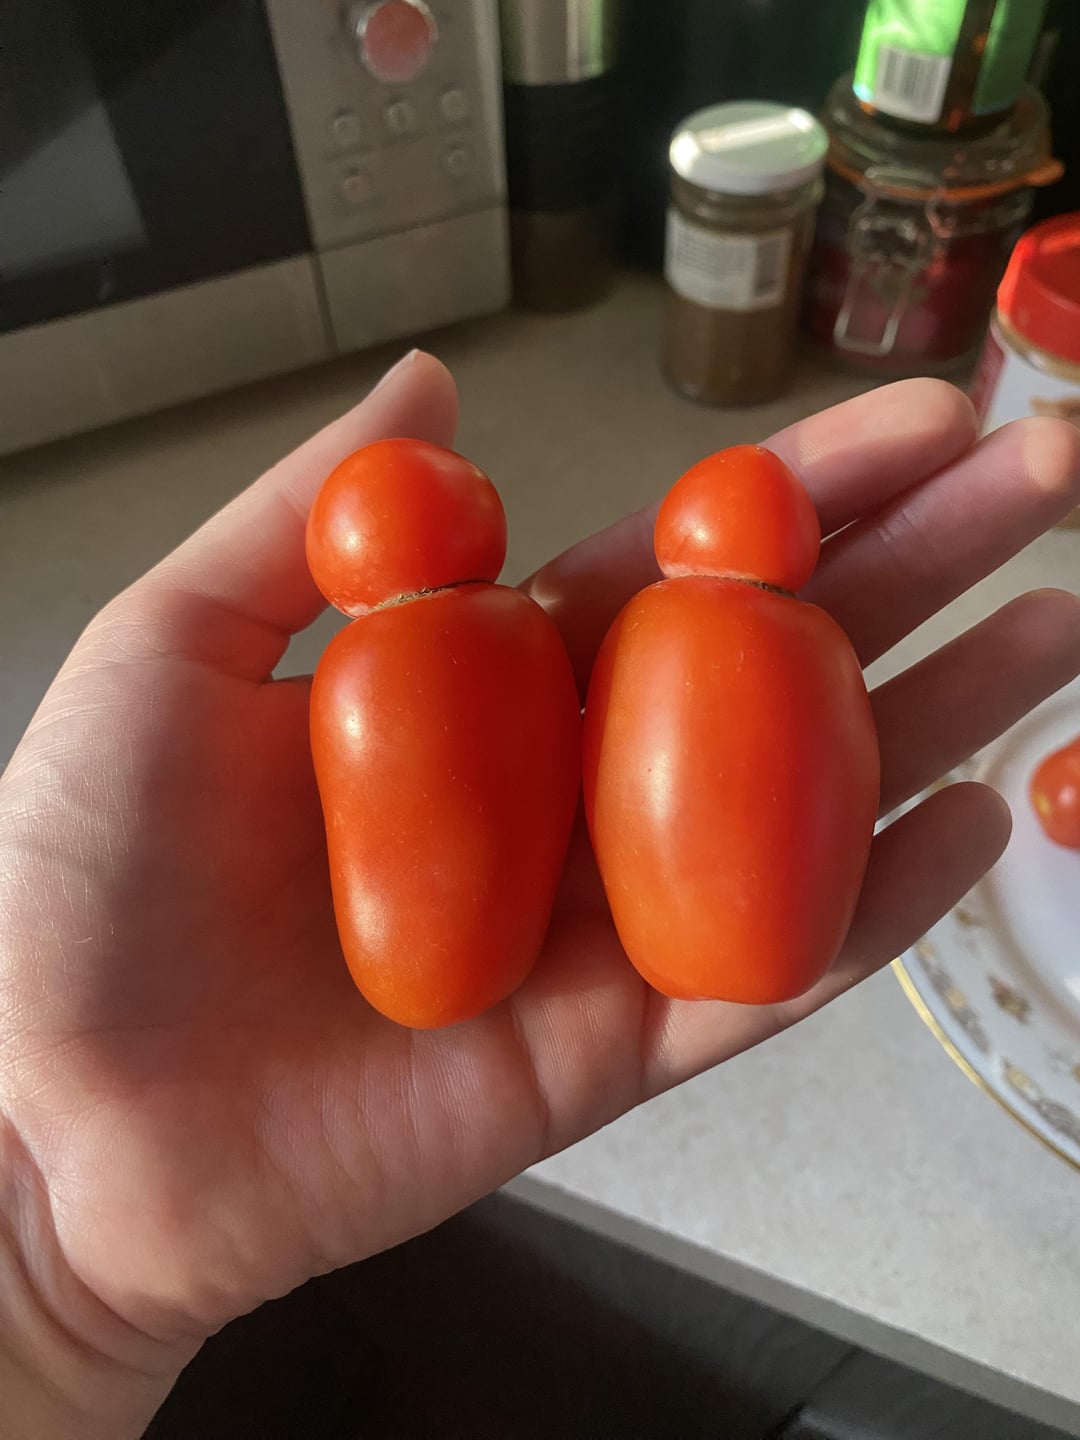 small-roma-tomatoes-that-look-like-people-v0-yoeqamddjkoc1.jpeg